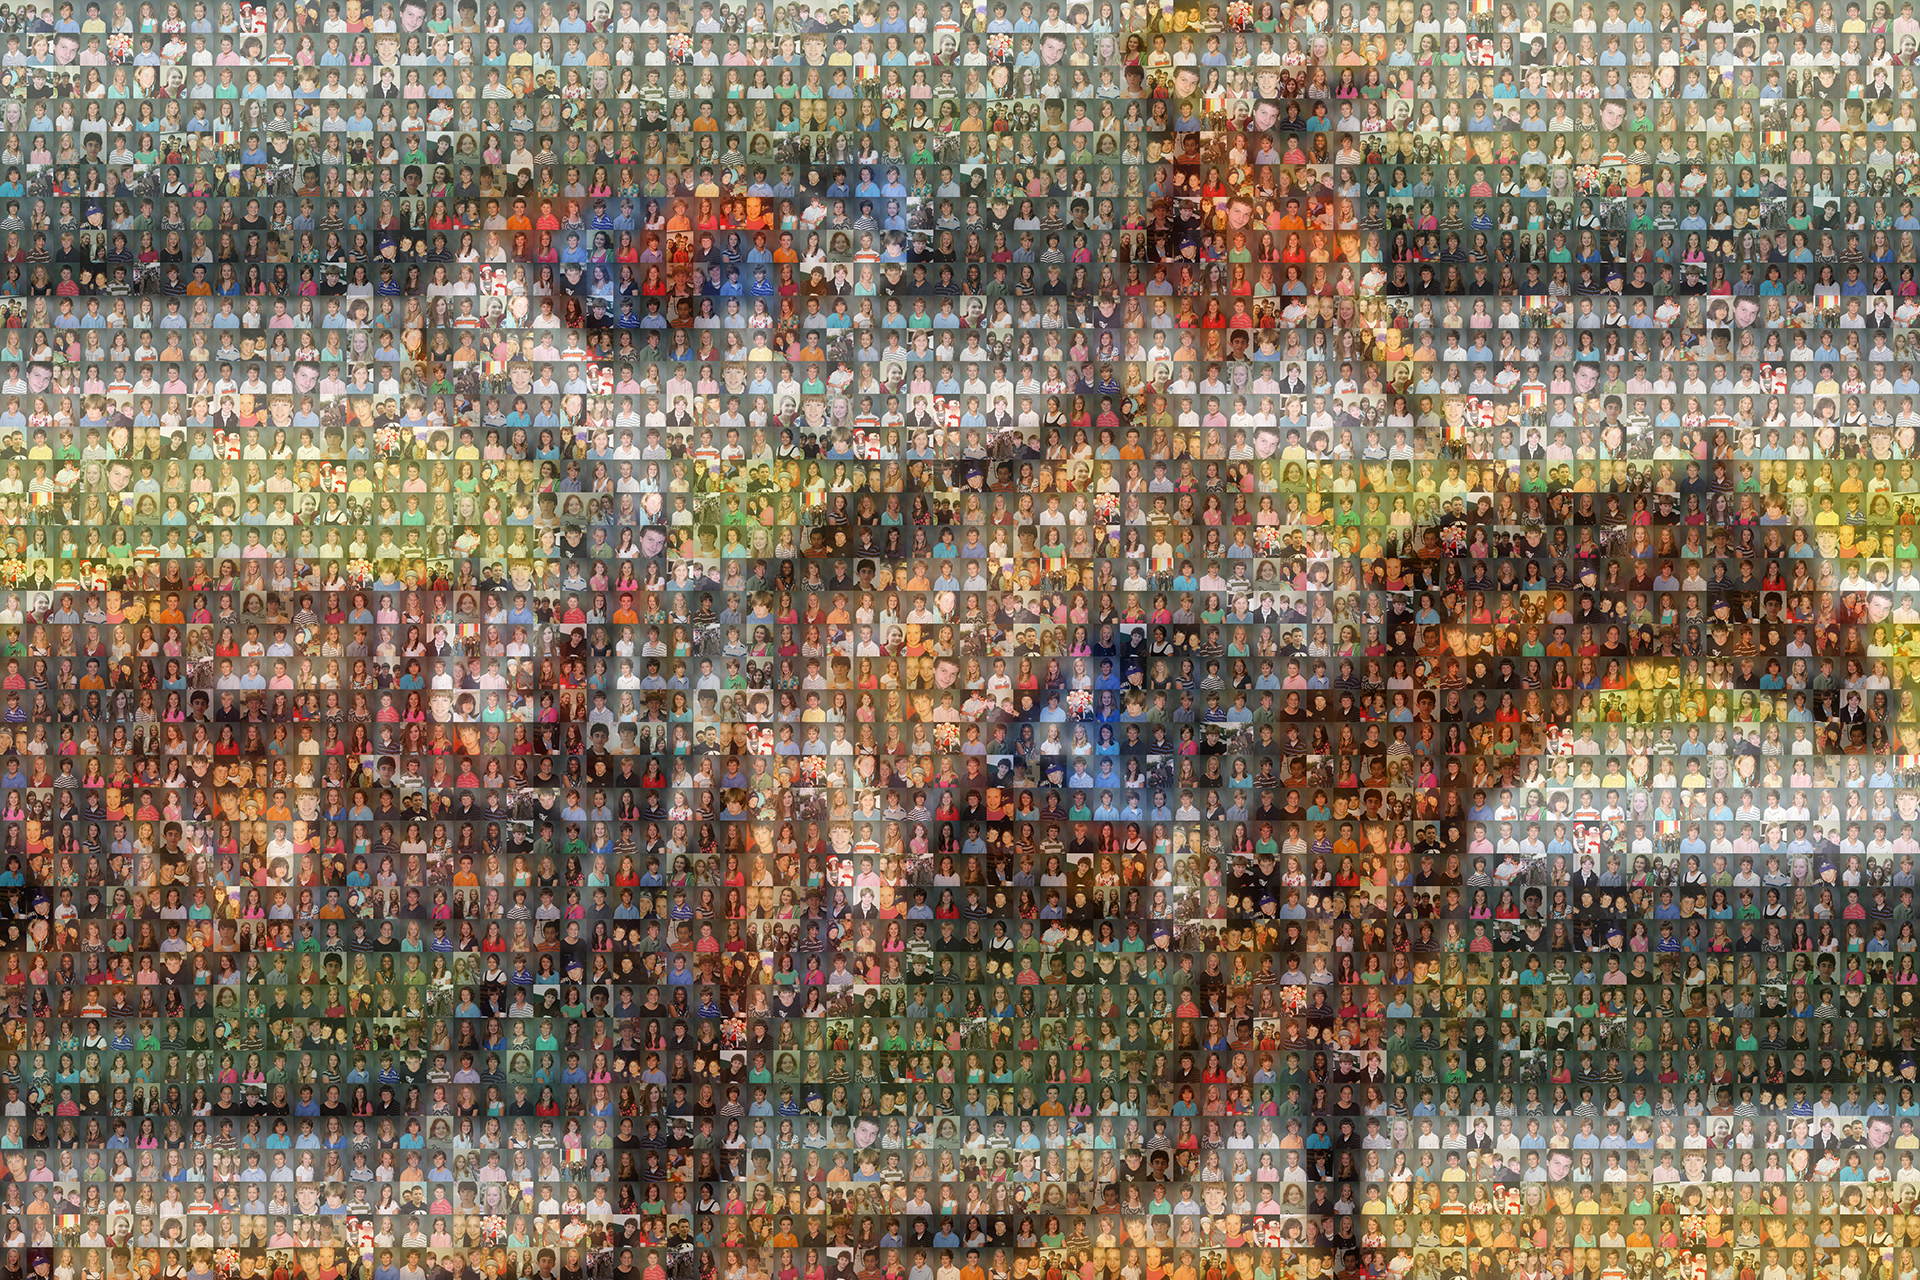 photo mosaic created using 149 student portraits